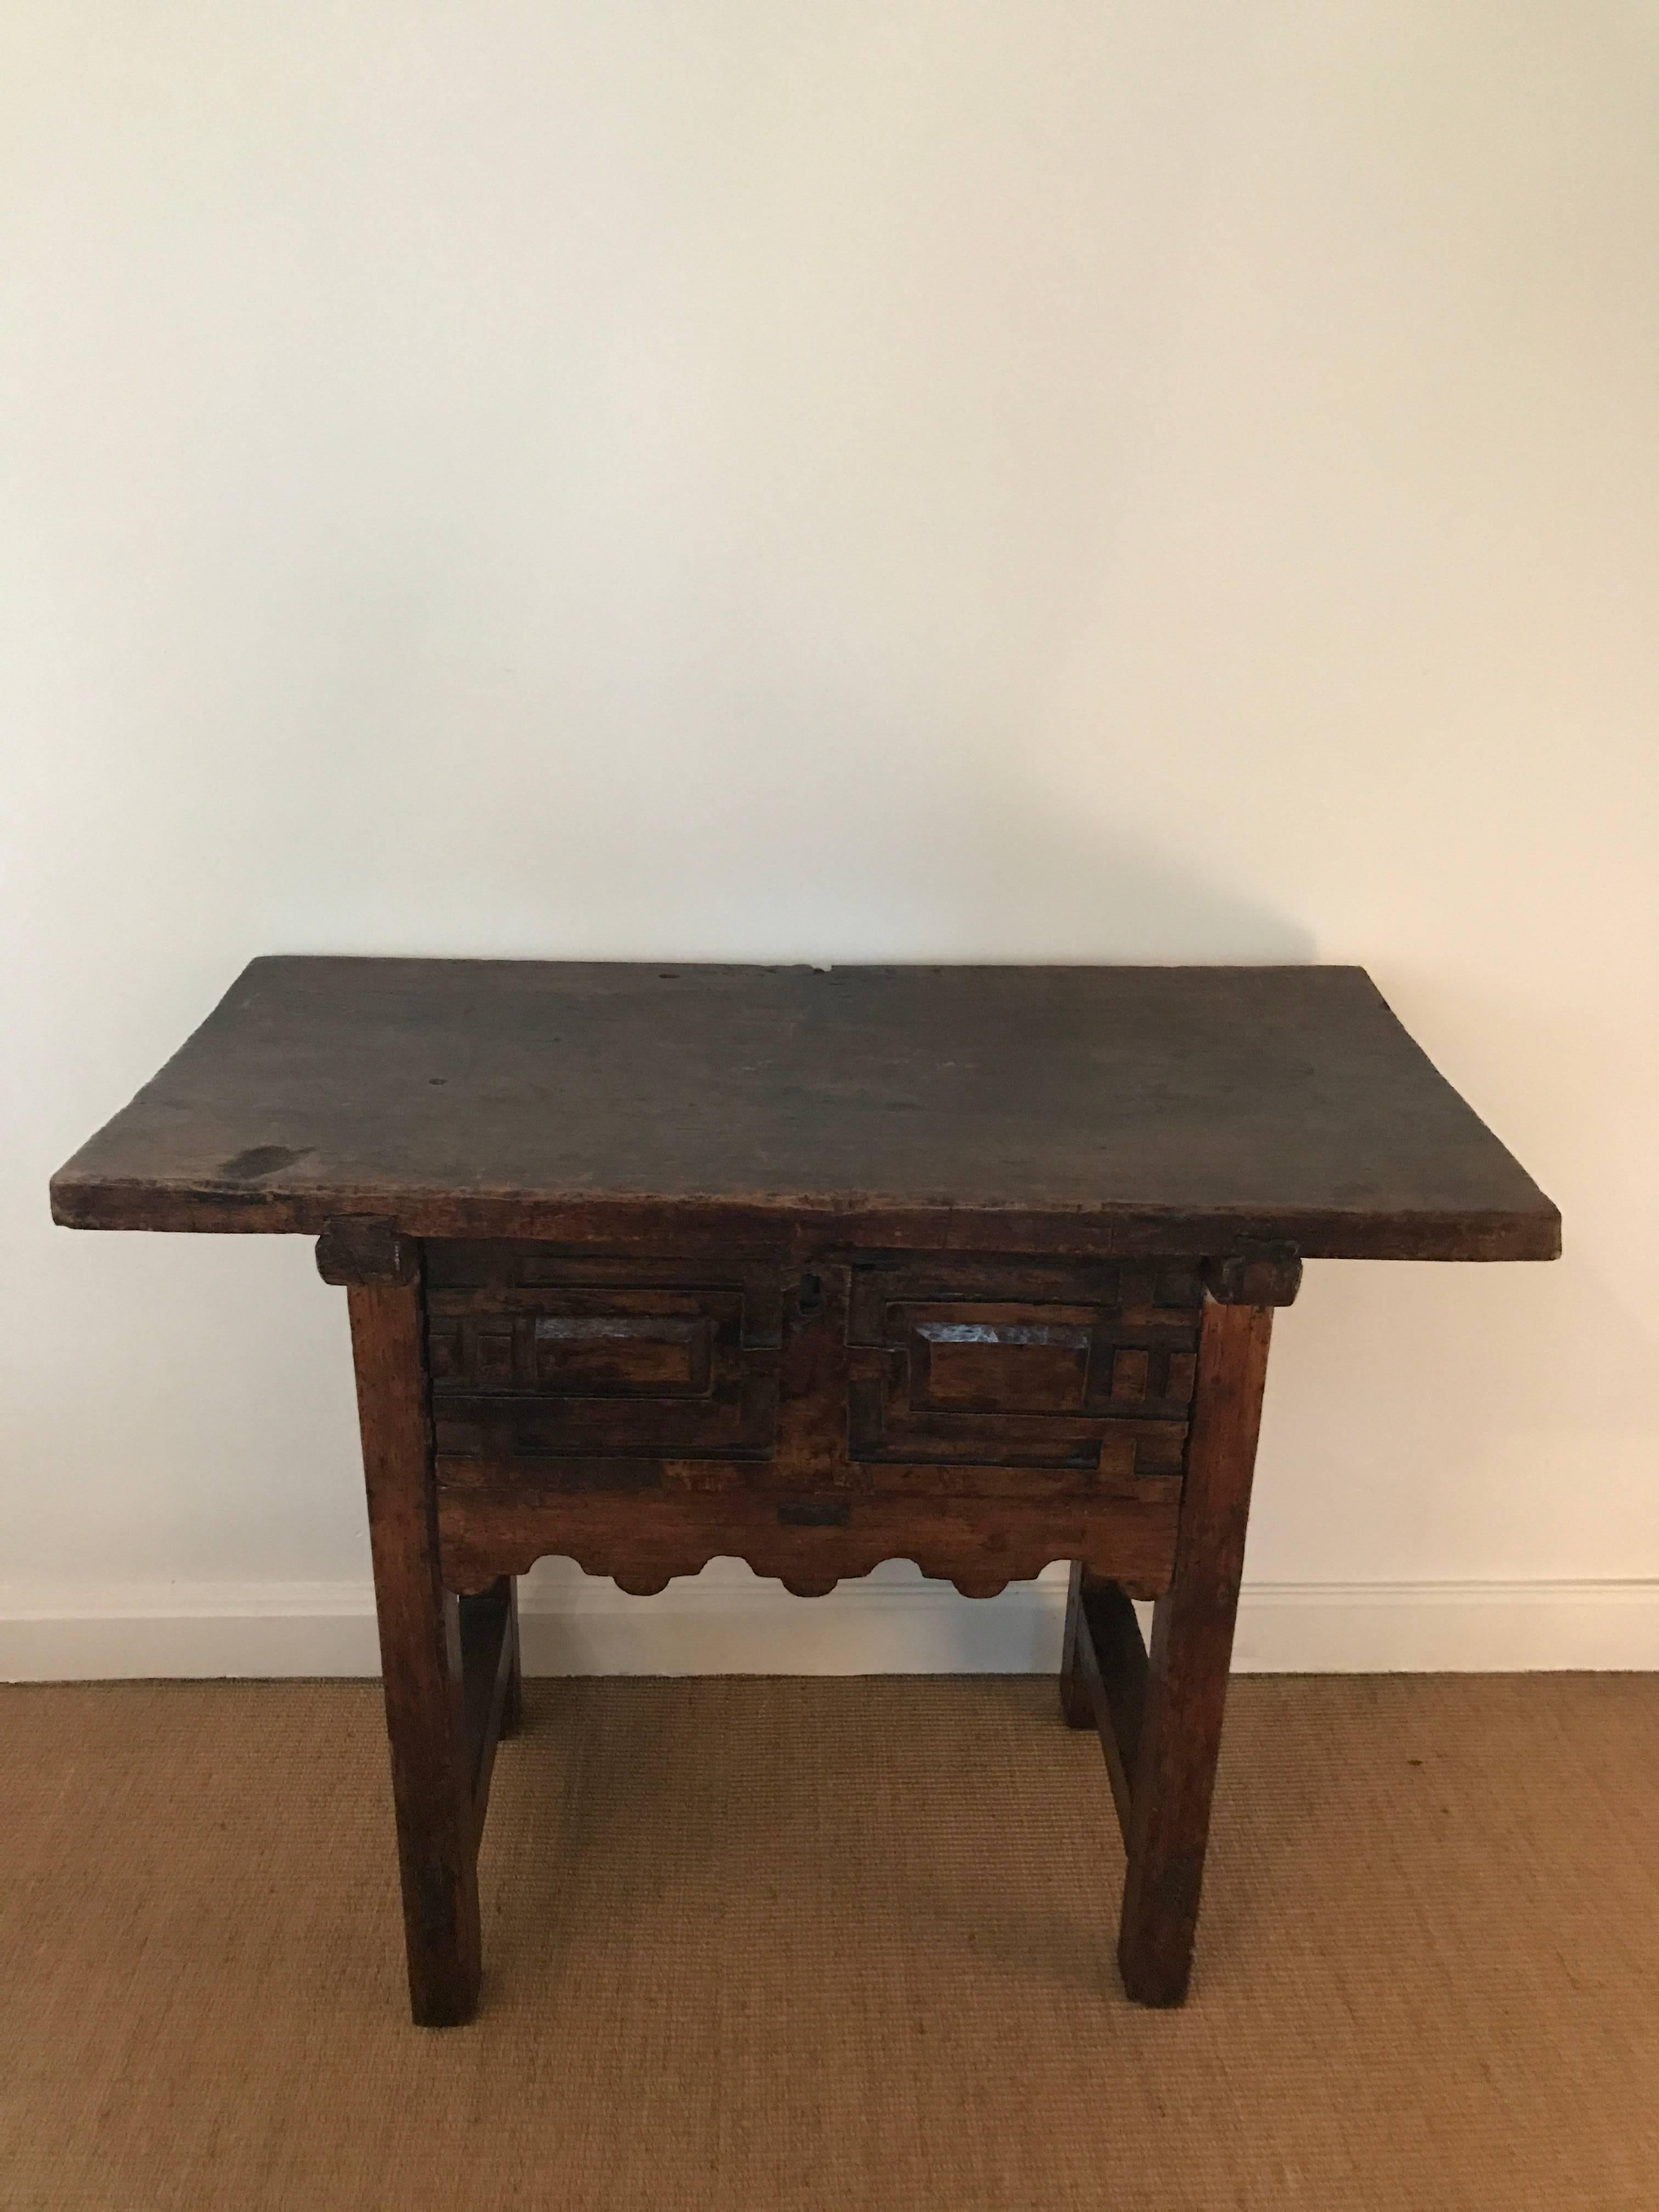 Spanish Walnut Side Table with good patina
18th Century